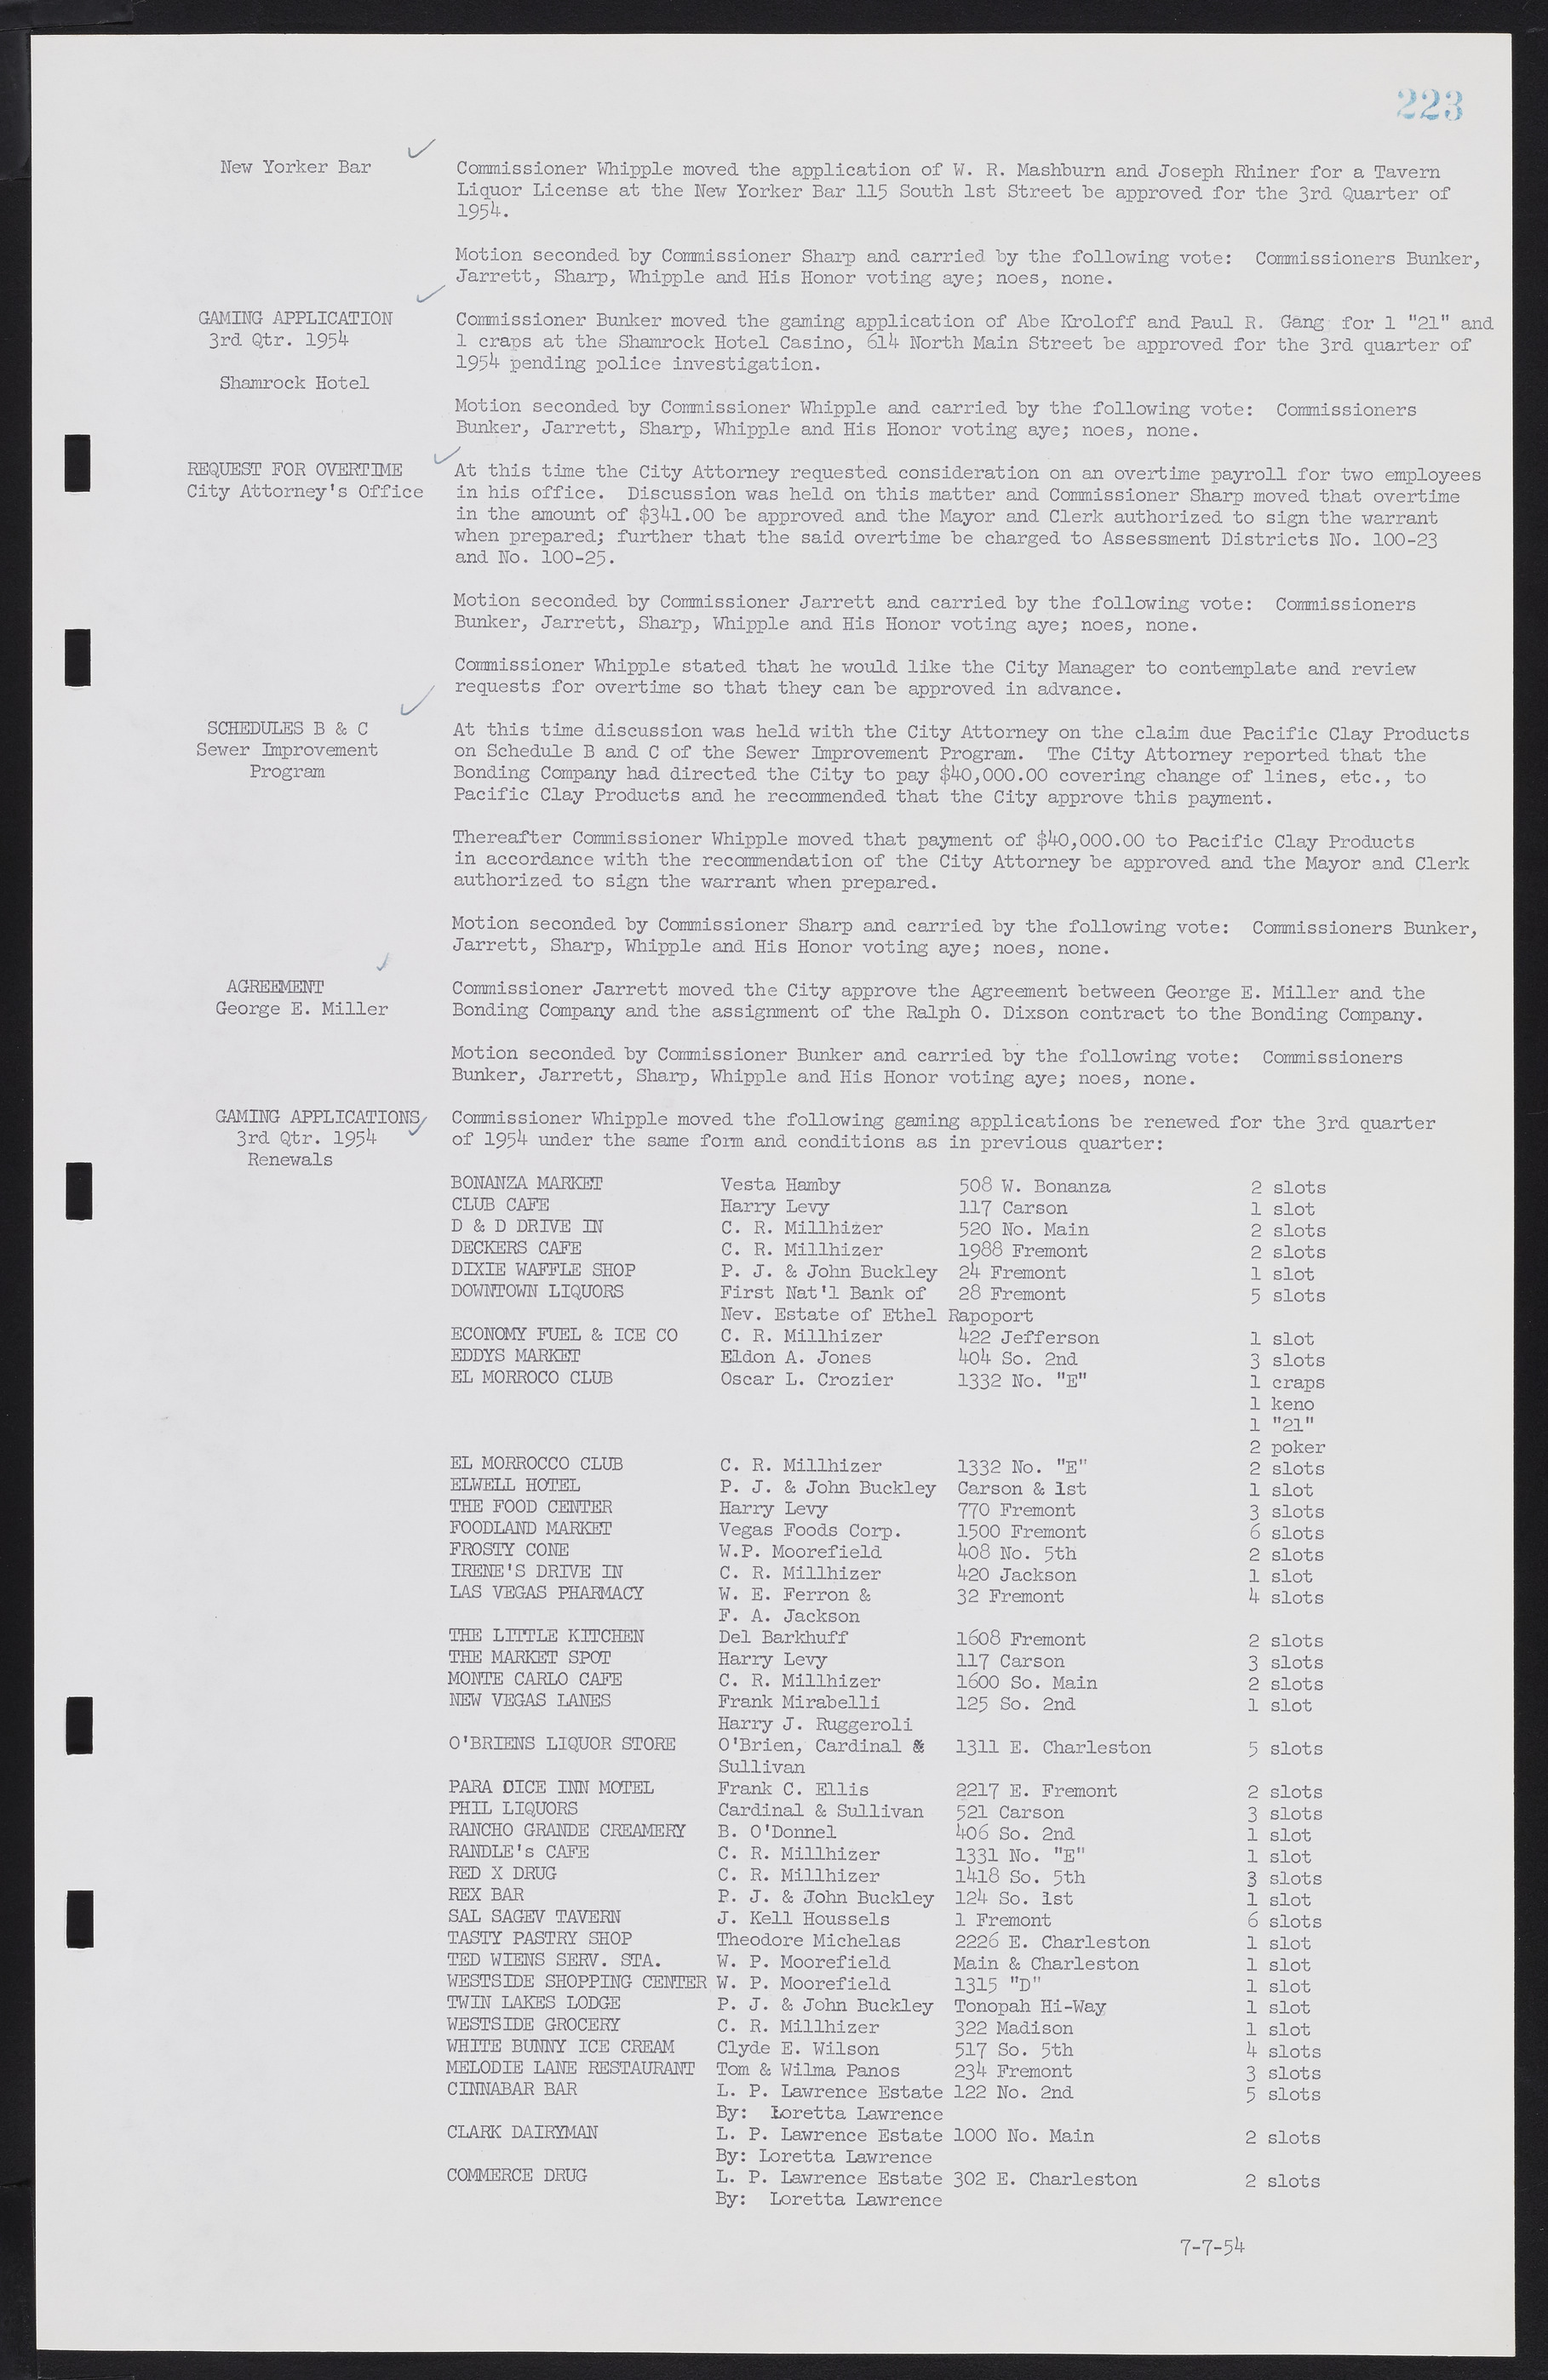 Las Vegas City Commission Minutes, February 17, 1954 to September 21, 1955, lvc000009-229